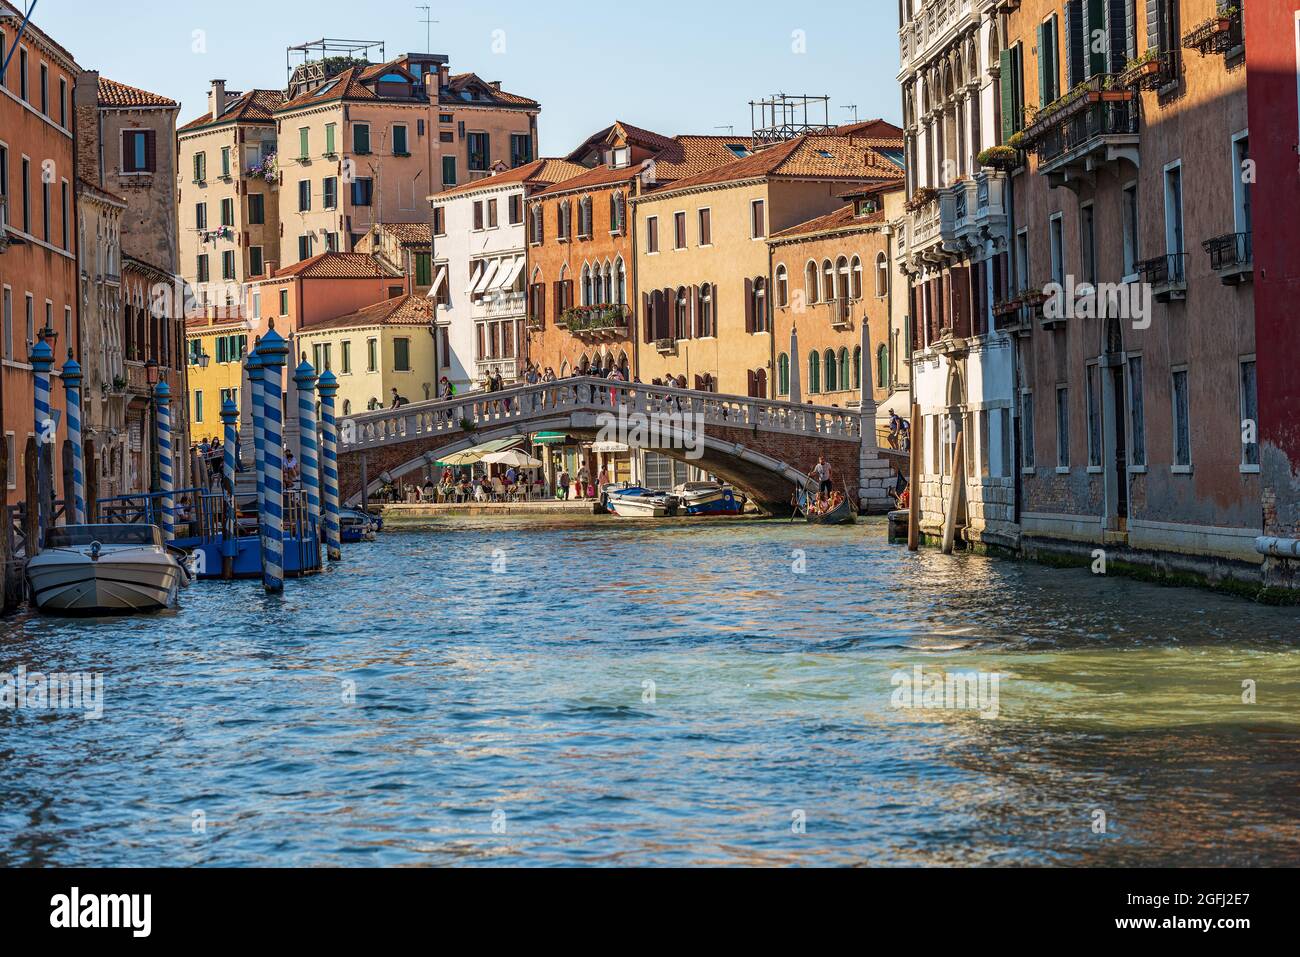 Ponte delle Guglie (Bridge of the Spires - 1580) over the Cannaregio canal of the Venetian lagoon. Venice, UNESCO world heritage site, Italy, Europe. Stock Photo